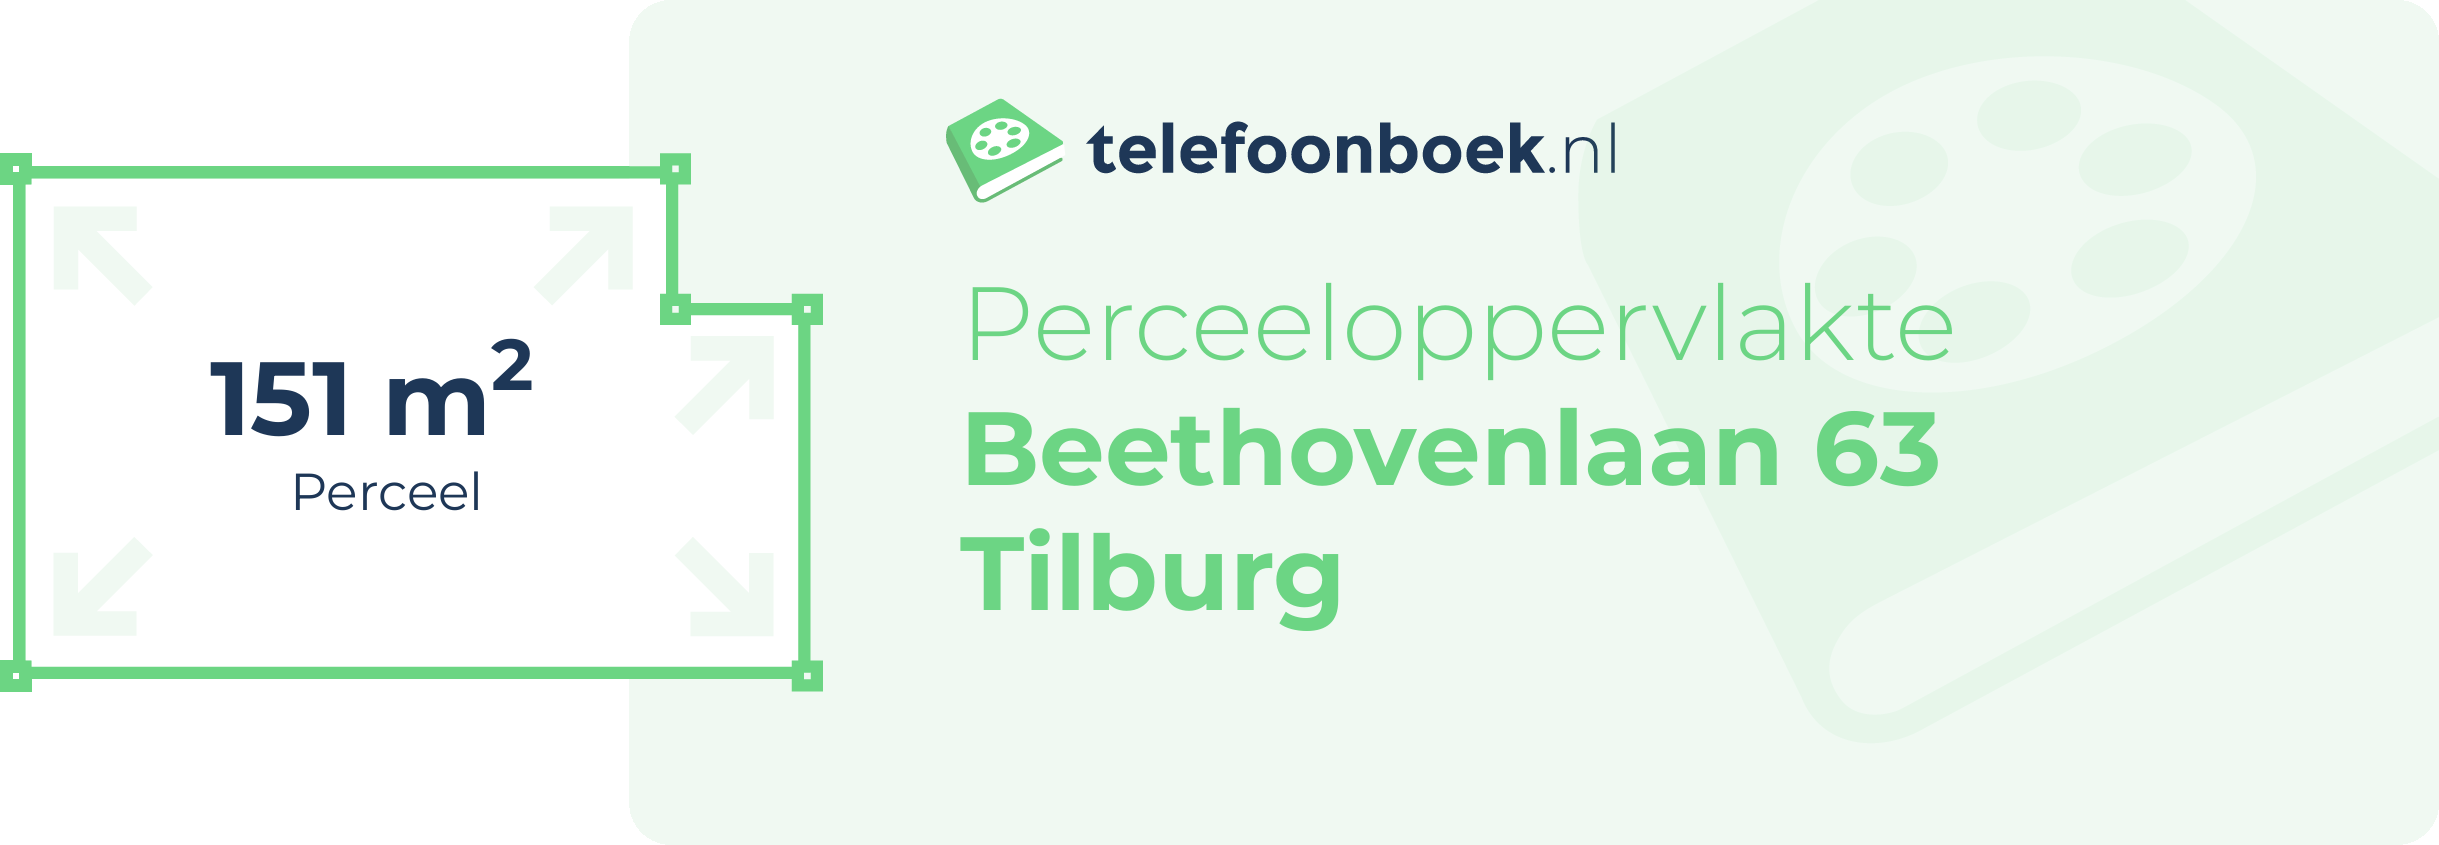 Perceeloppervlakte Beethovenlaan 63 Tilburg